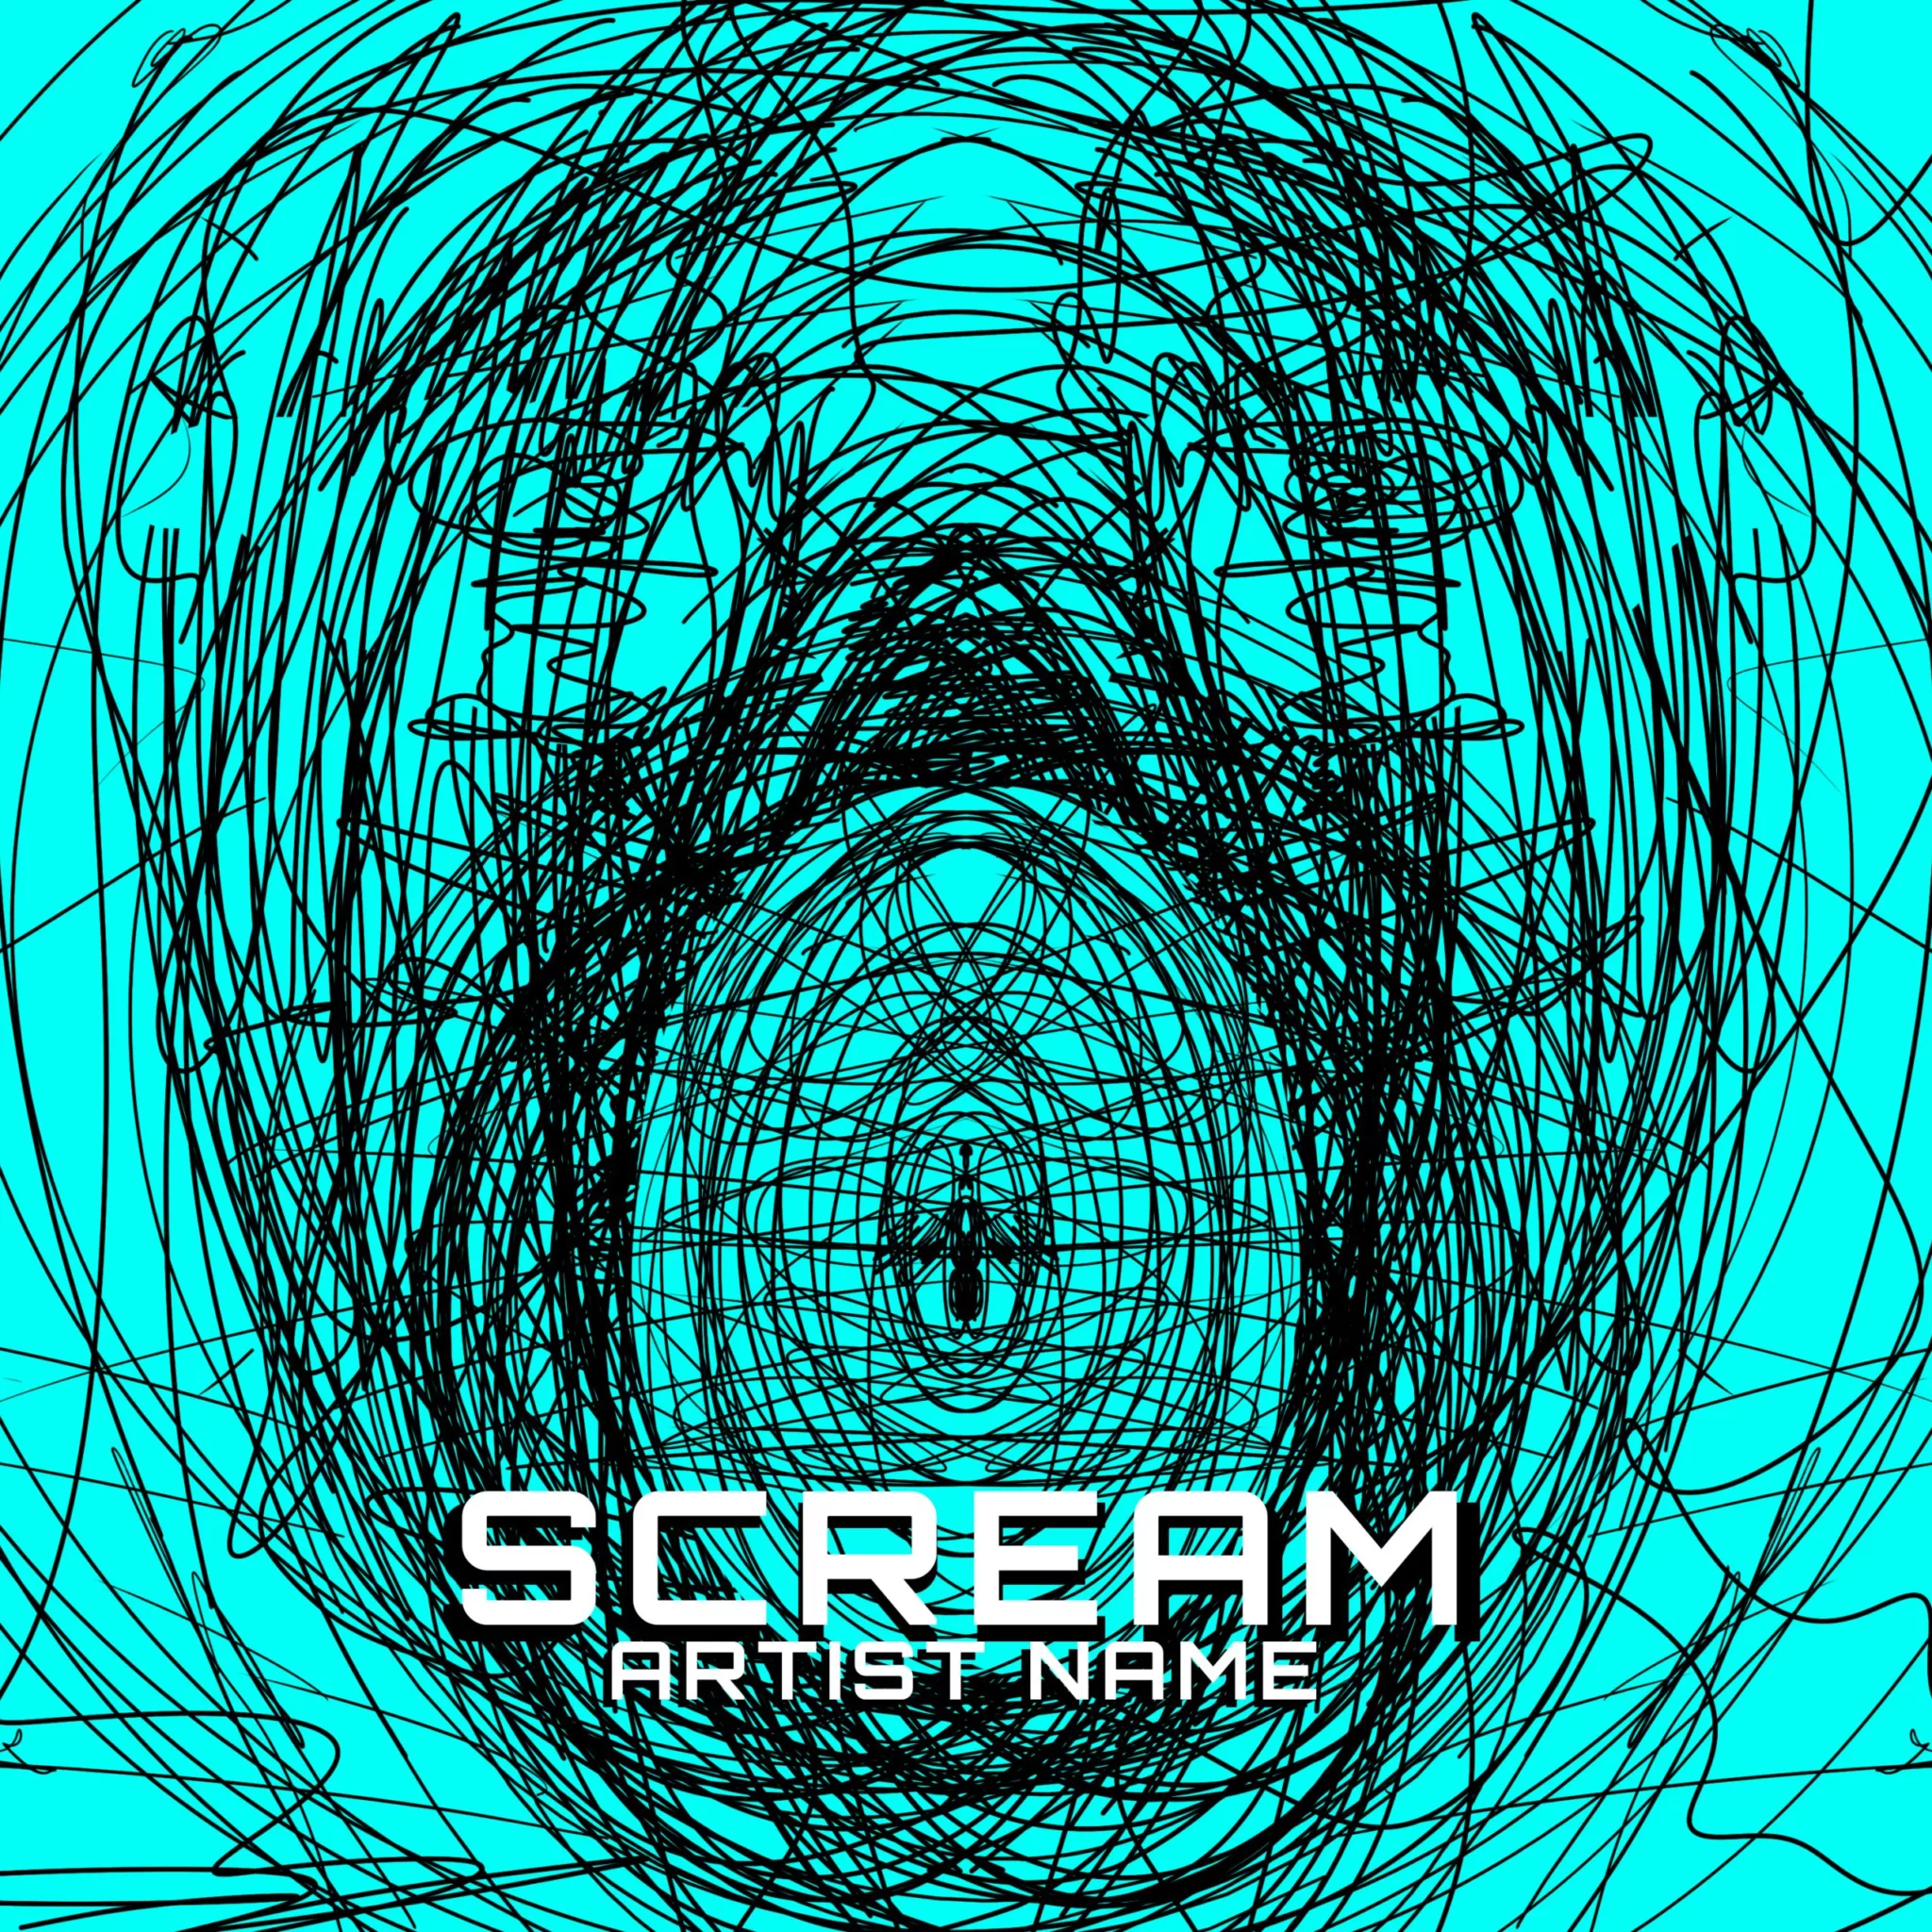 Scream cover art for sale